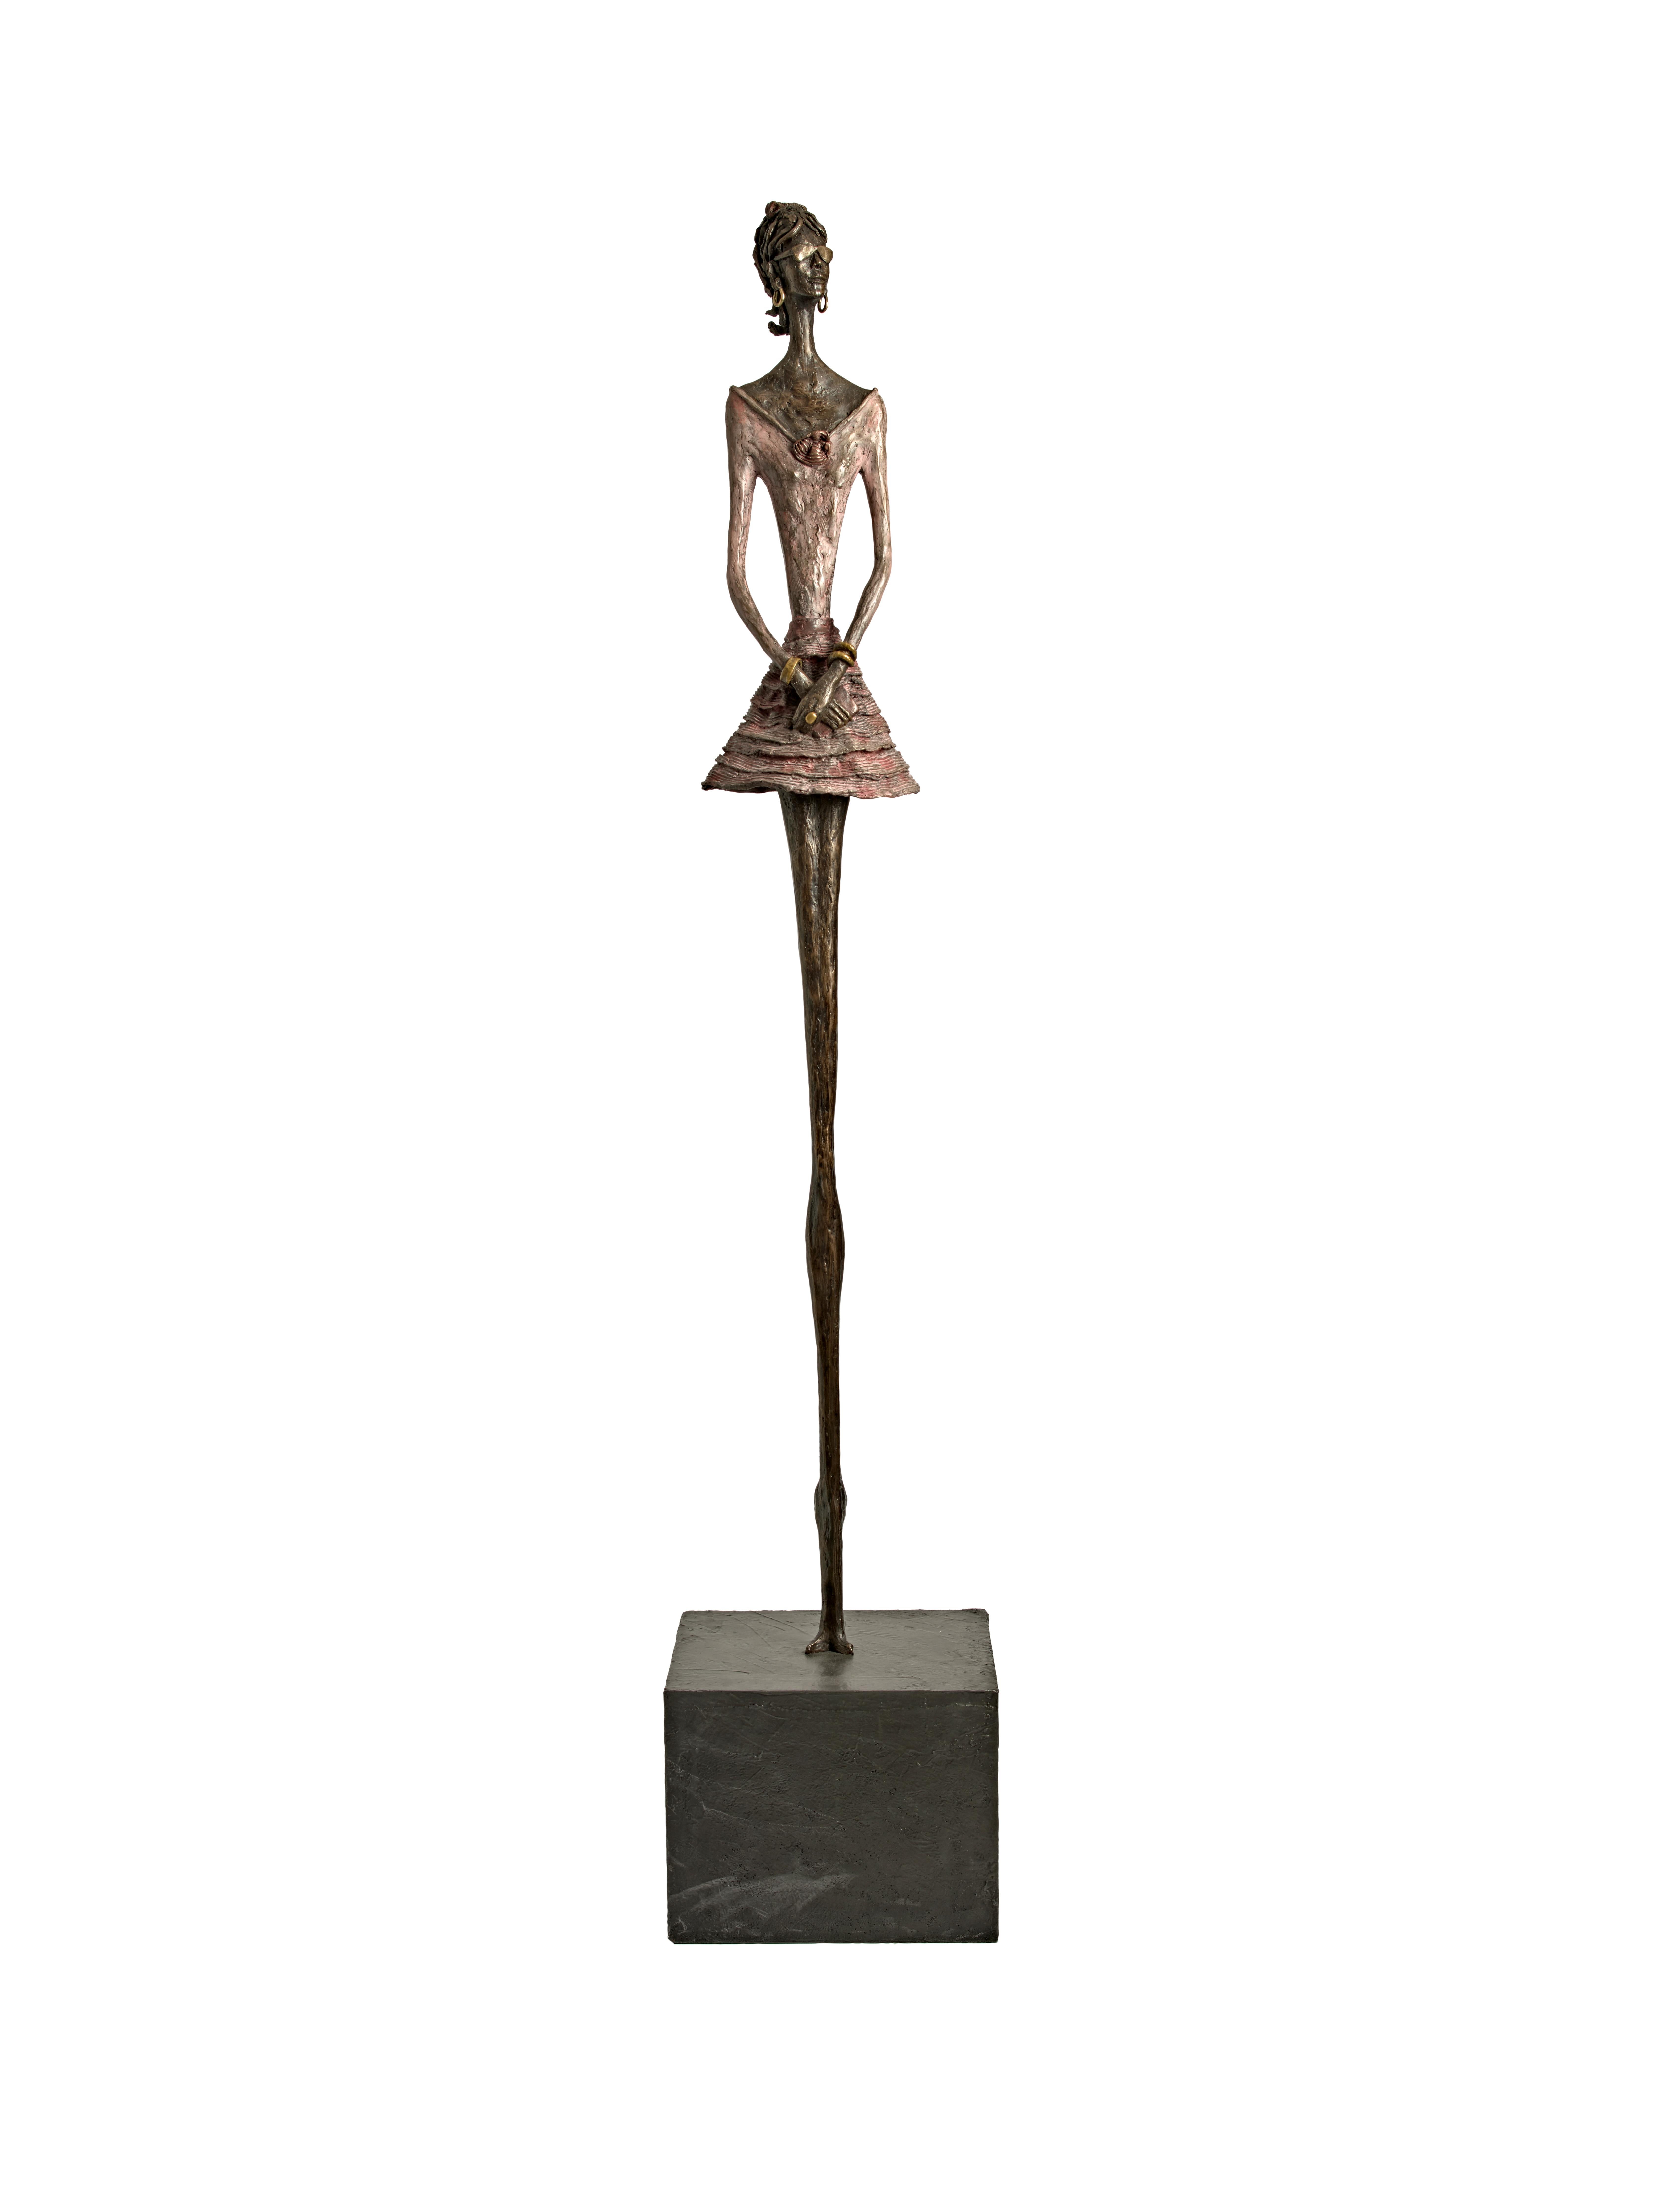 Daiquiri (résine de bronze) - sculpture contemporaine de mode féminine haute  - Sculpture de Sara Ingleby-Mackenzie